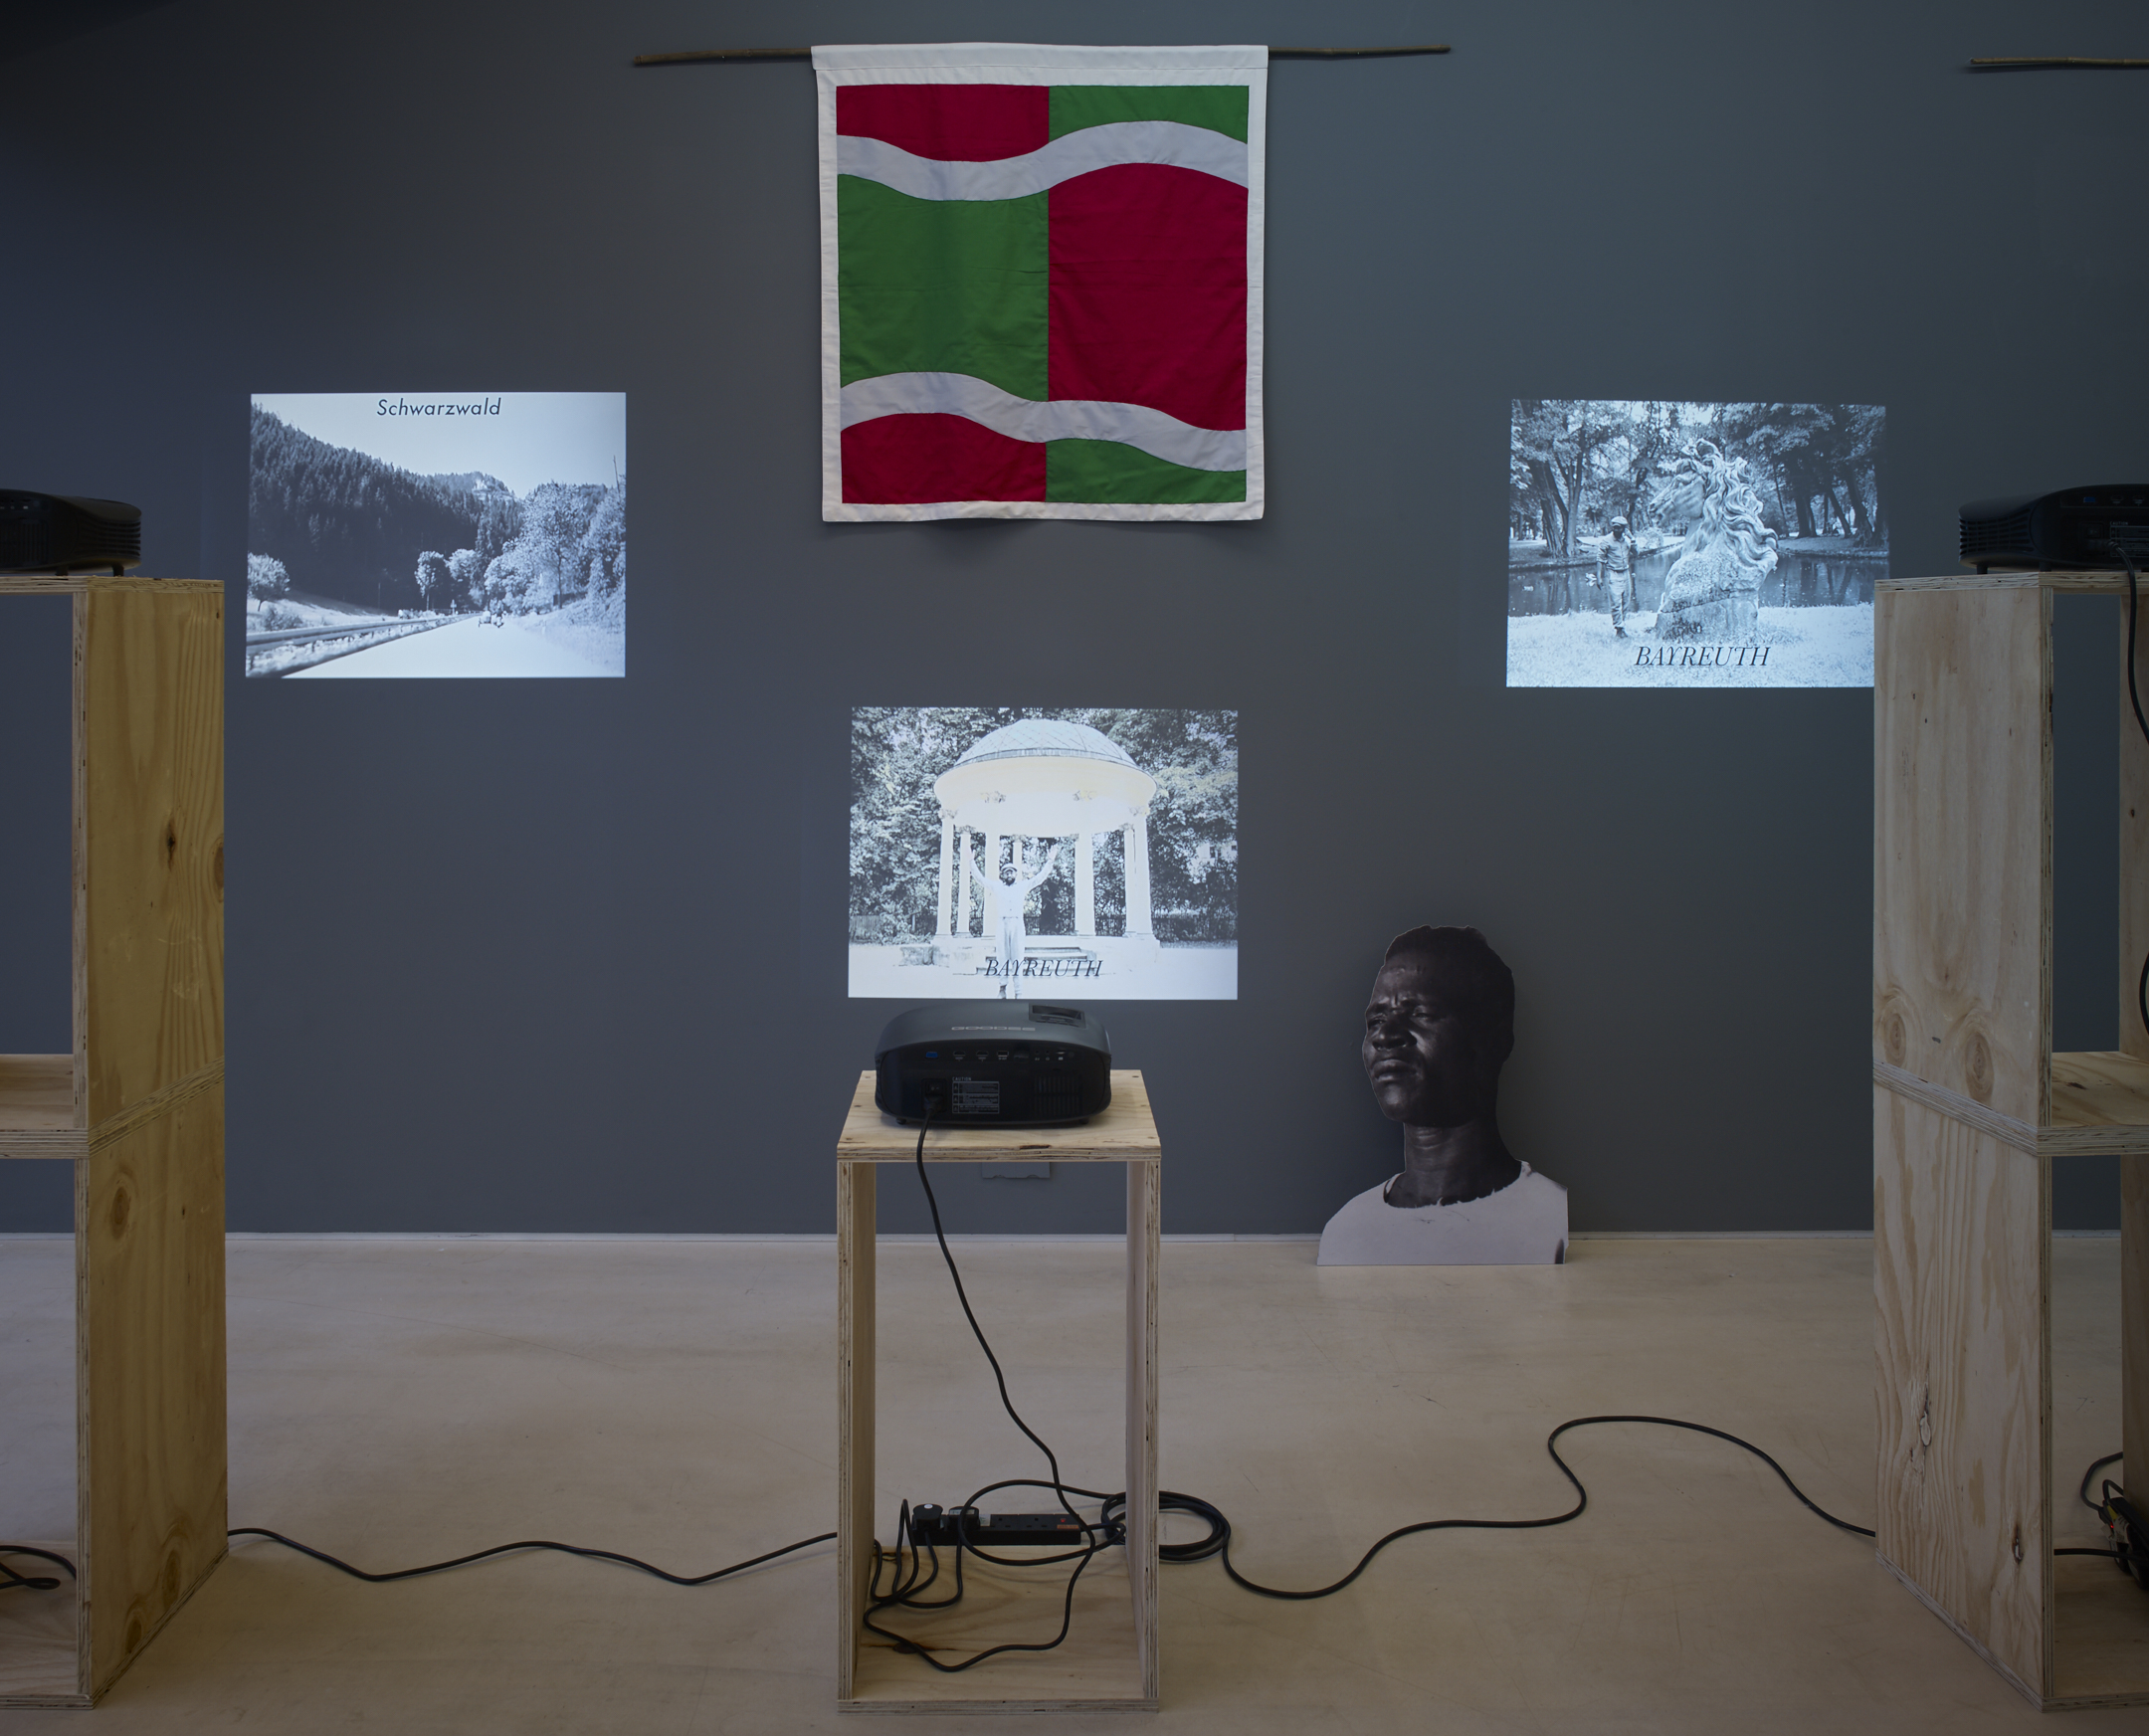 Installation View: Samson Kambalu, "Postcards from the Last Century" at PEER, 2020. Photo by Jackson White